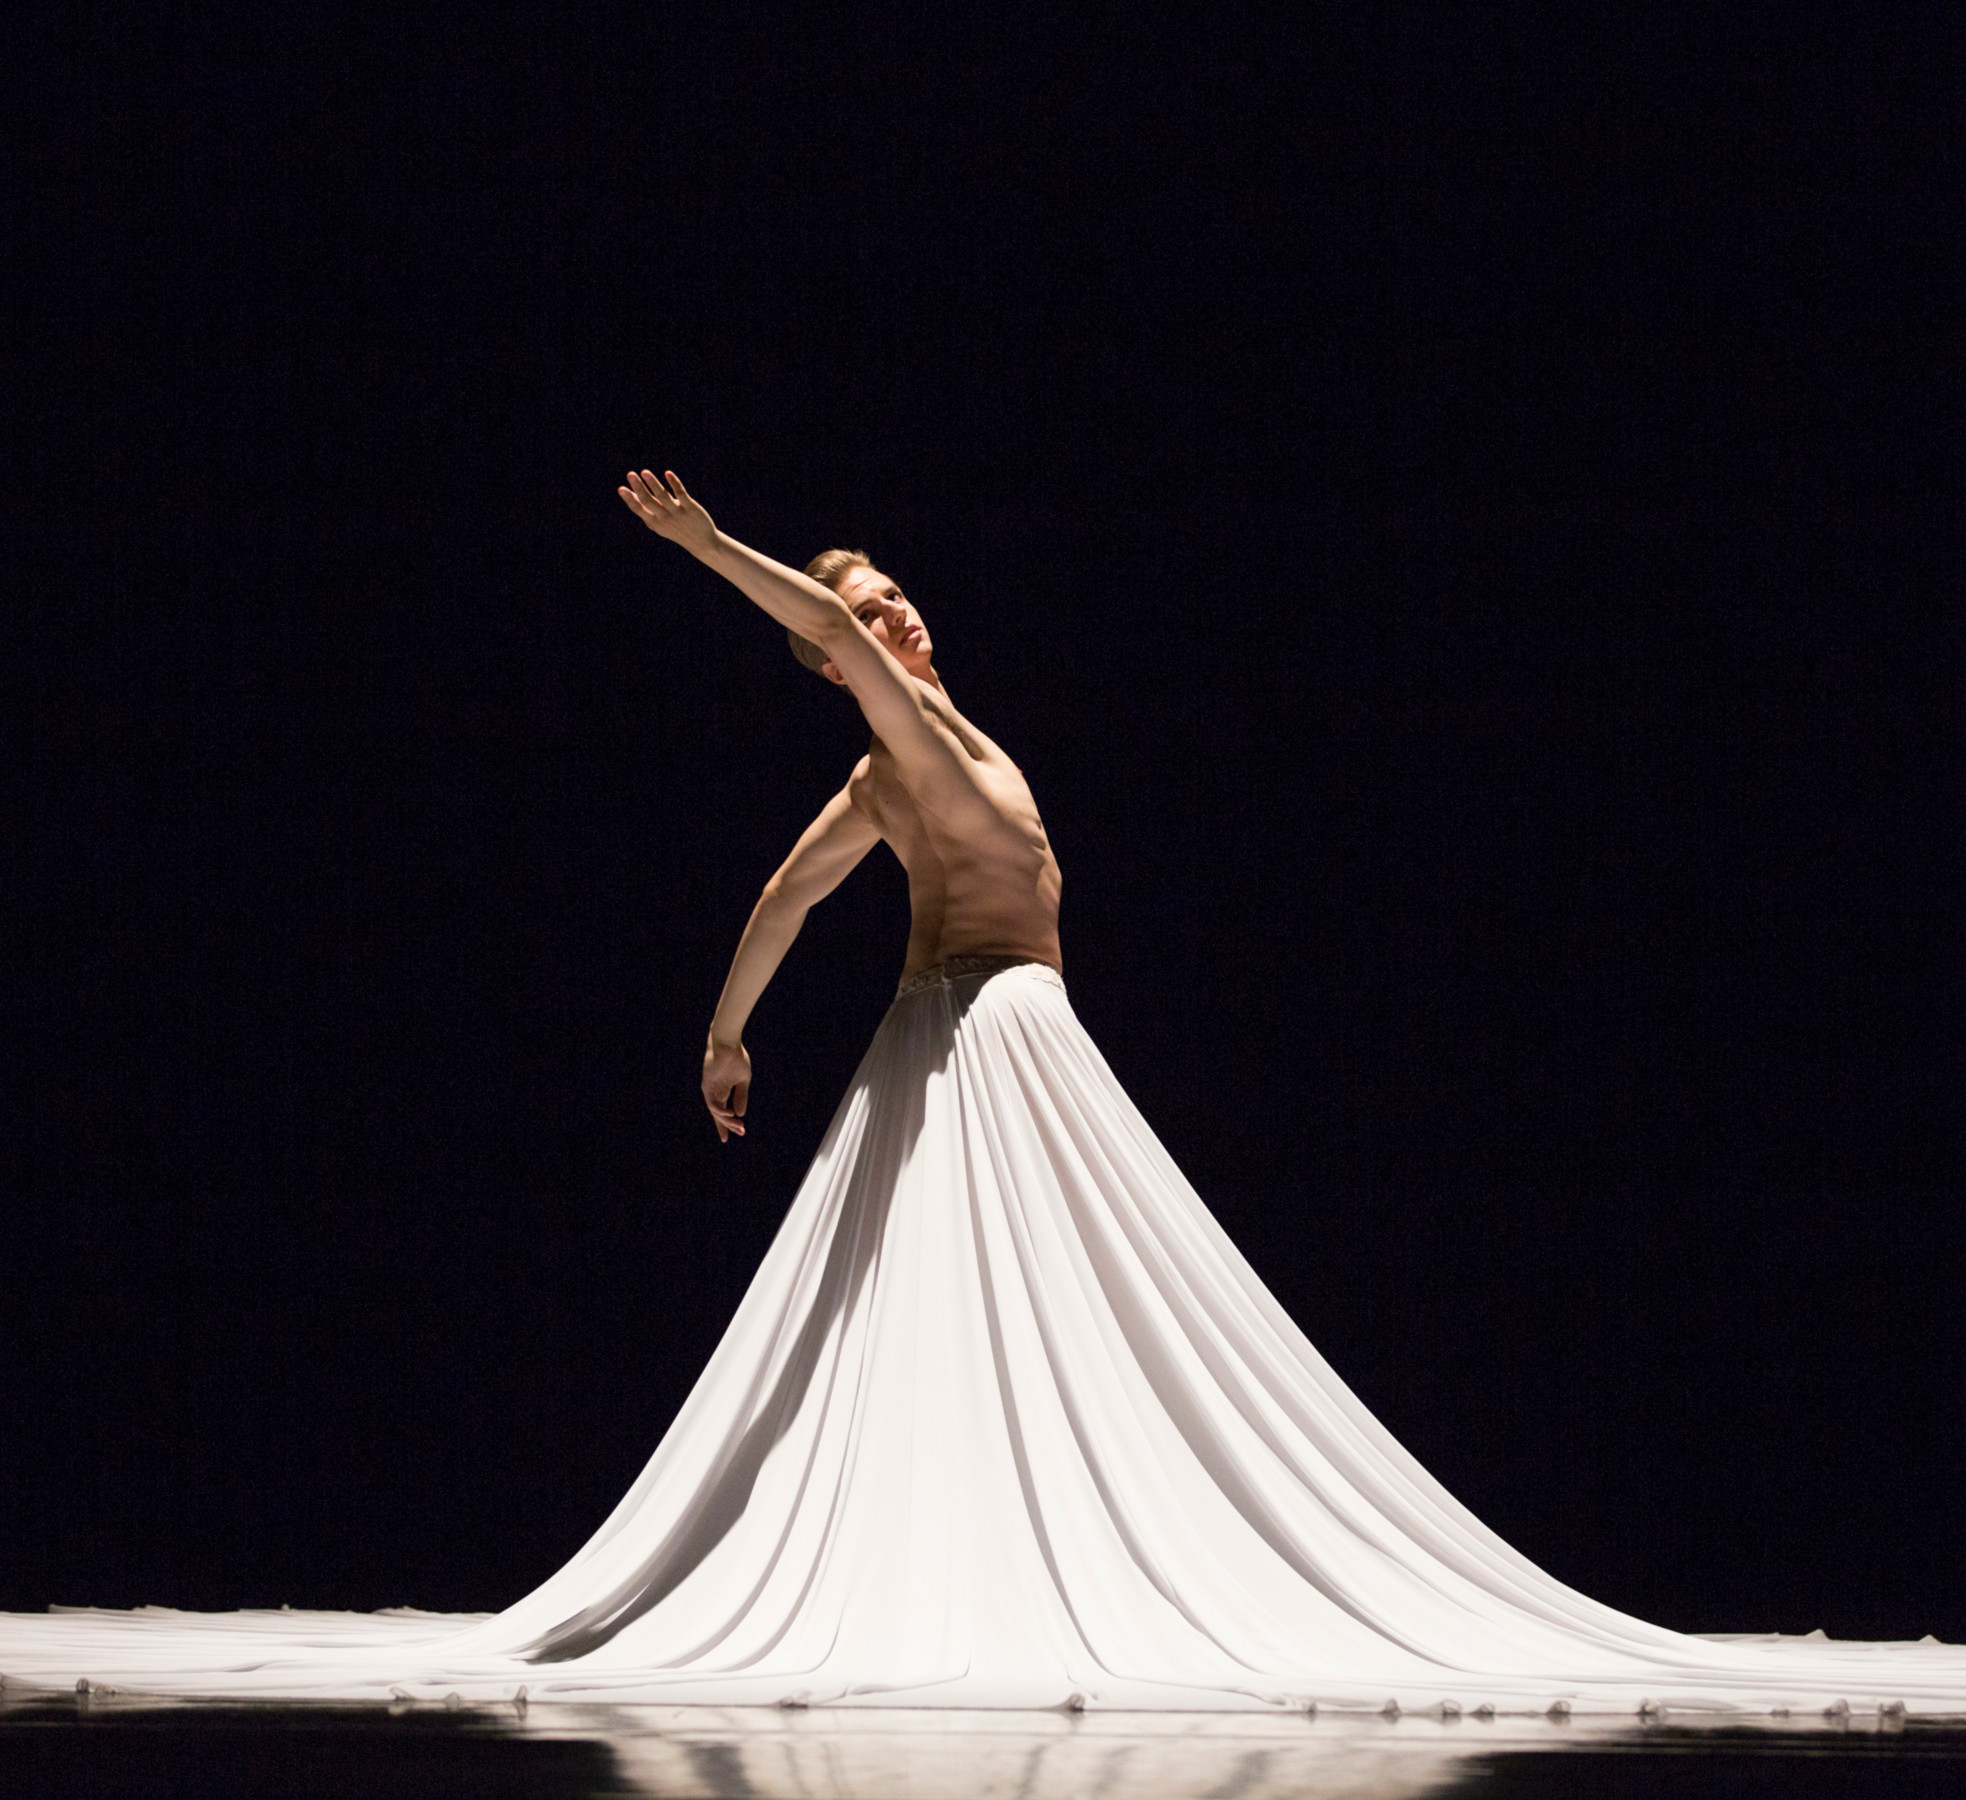 Ballet dancer against a black backdrop posing in a flowing white skirt.